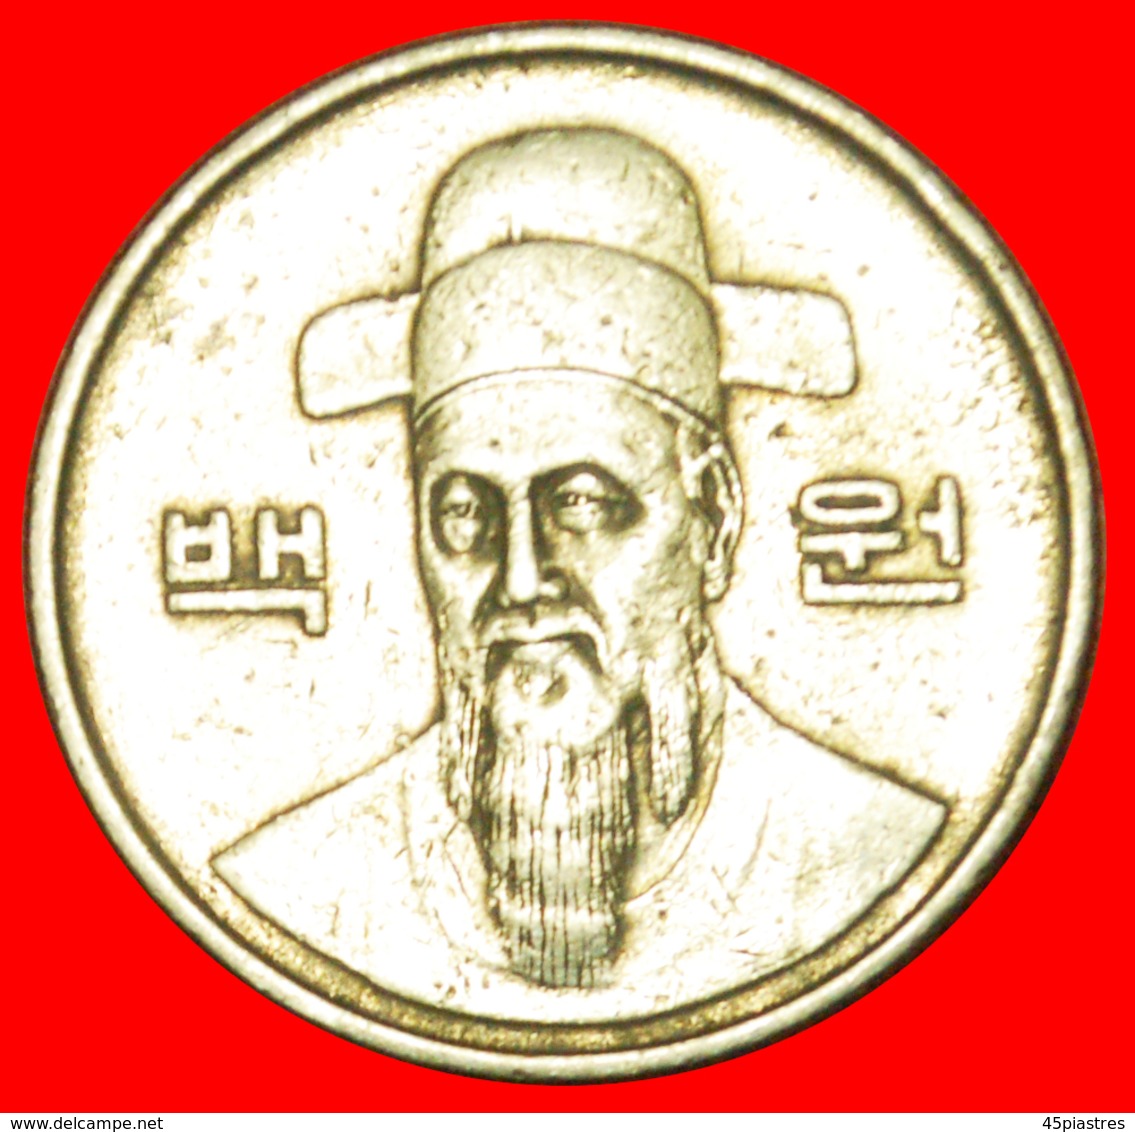 # ADMIRAL (1545-1598): SOUTH KOREA ★ 100 WON 1984! LOW START ★ NO RESERVE! - Korea, South